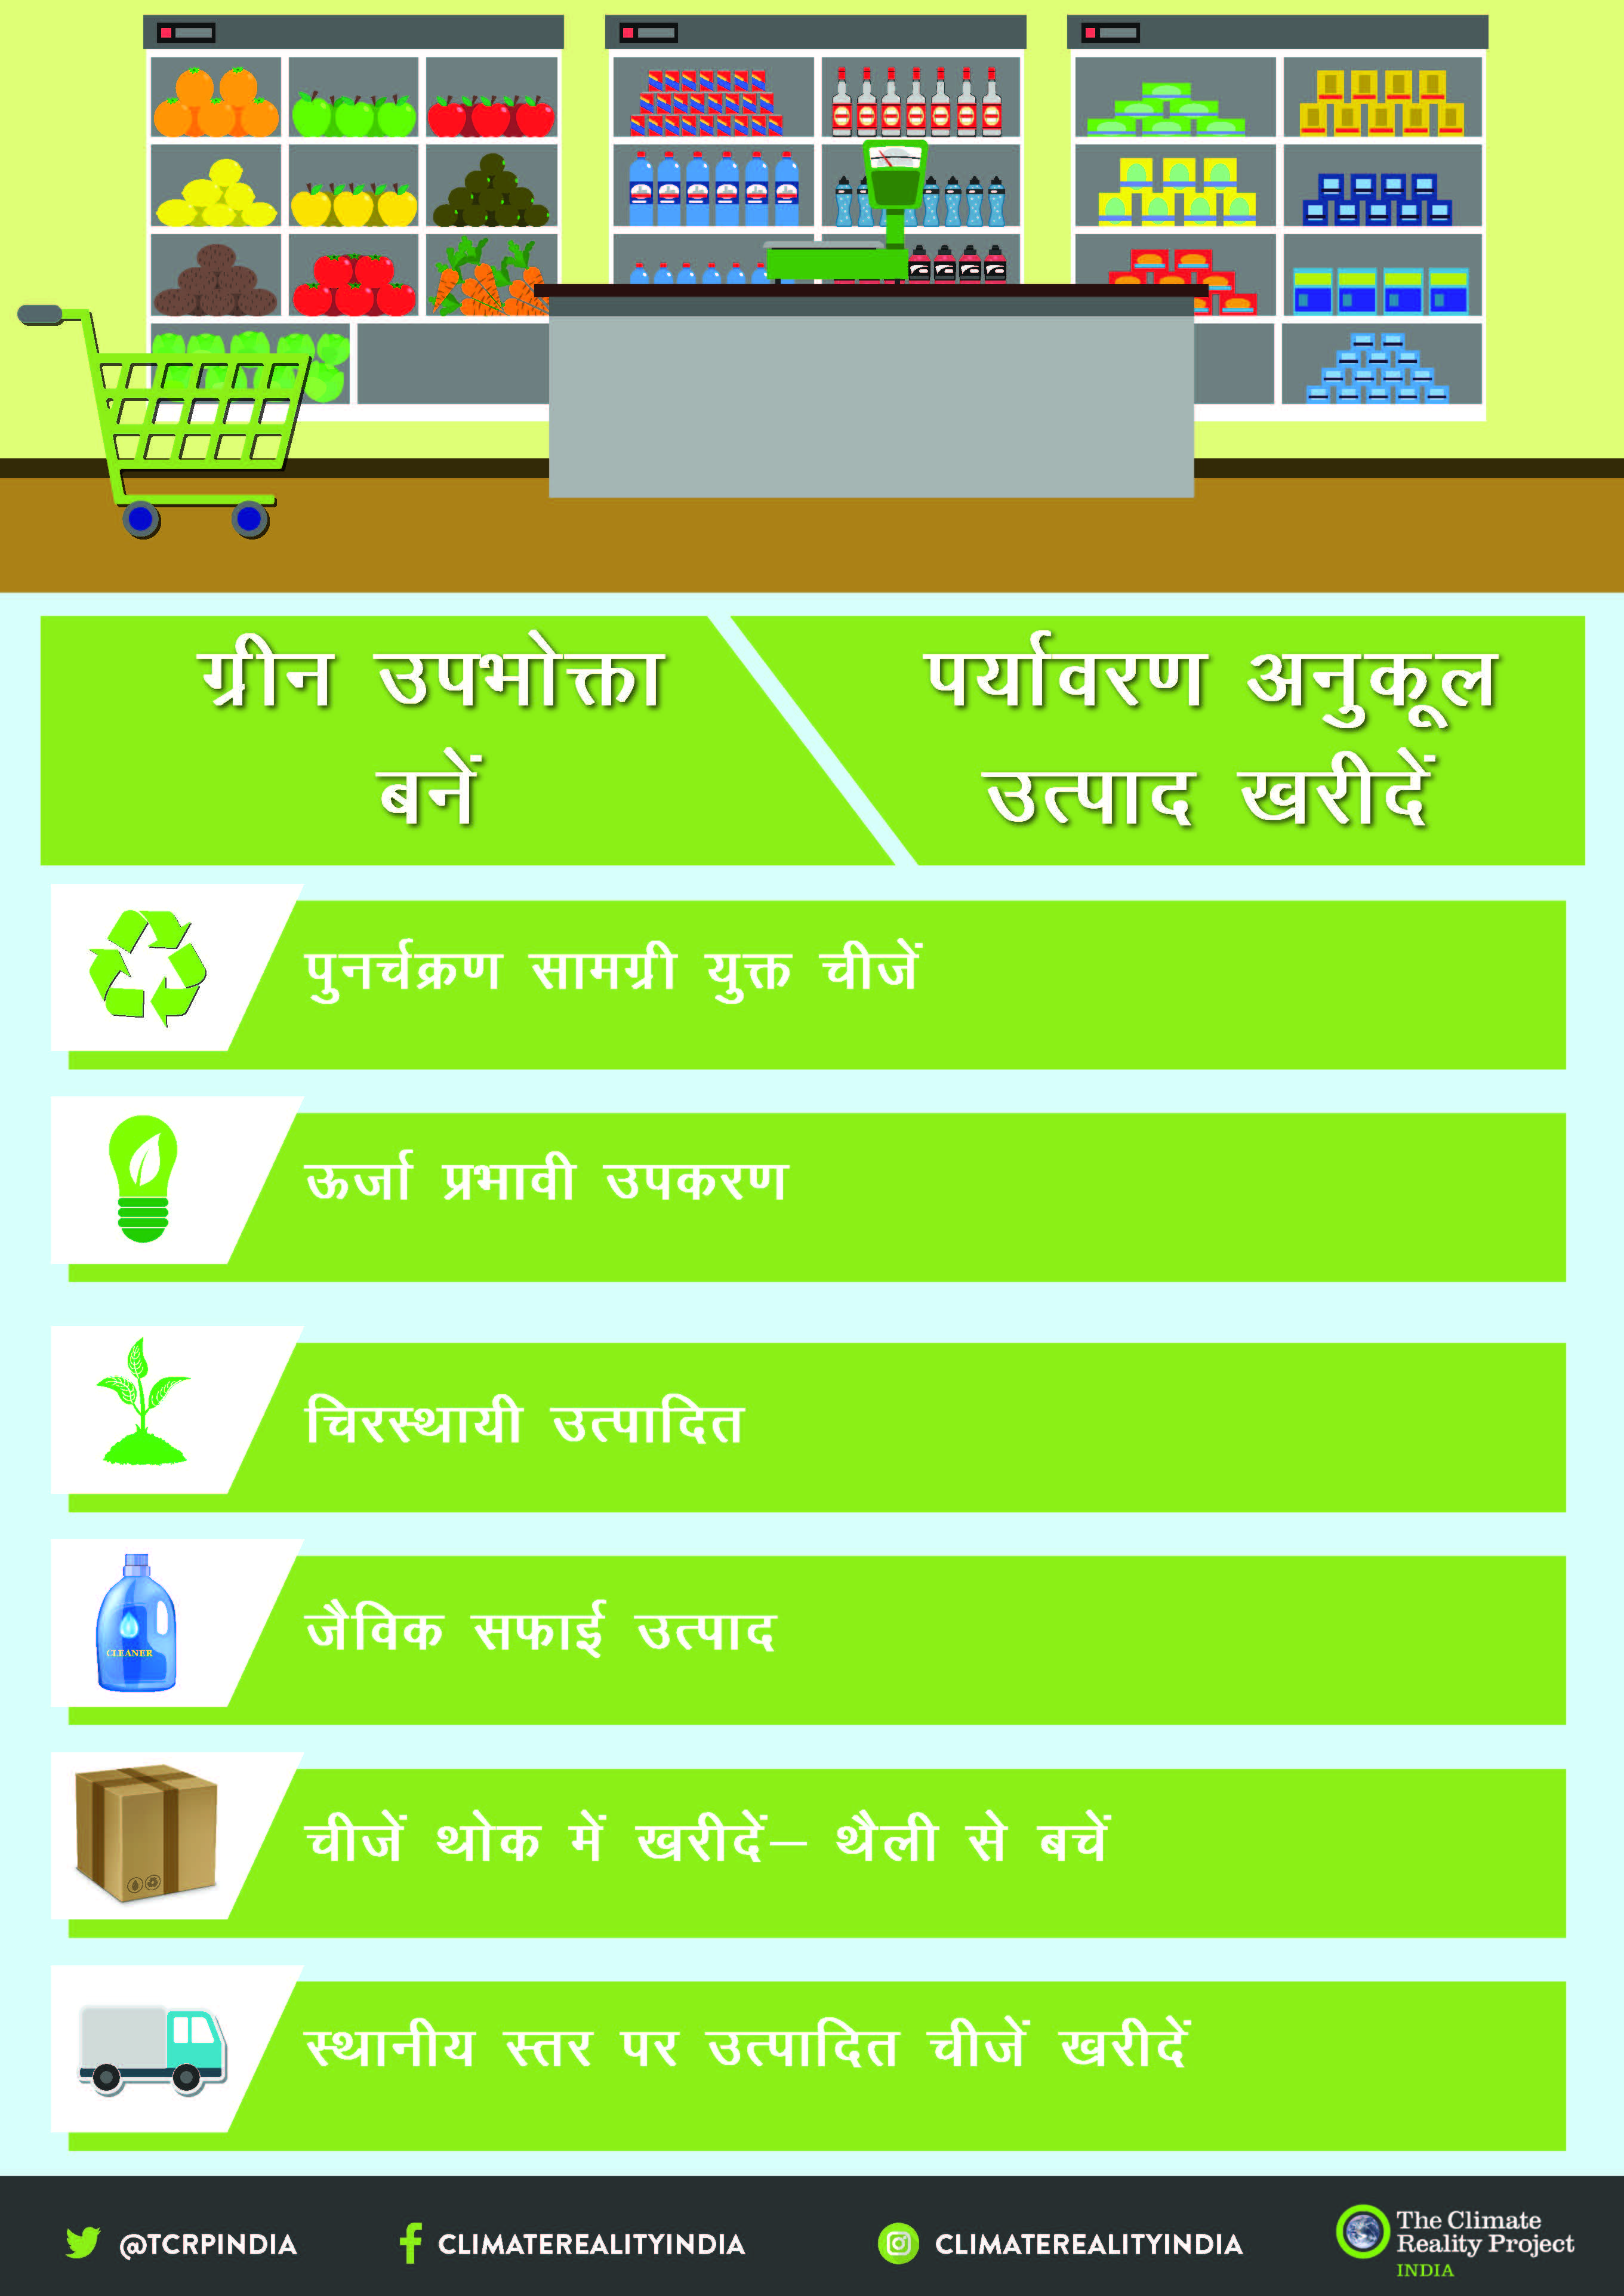 Green Consumer